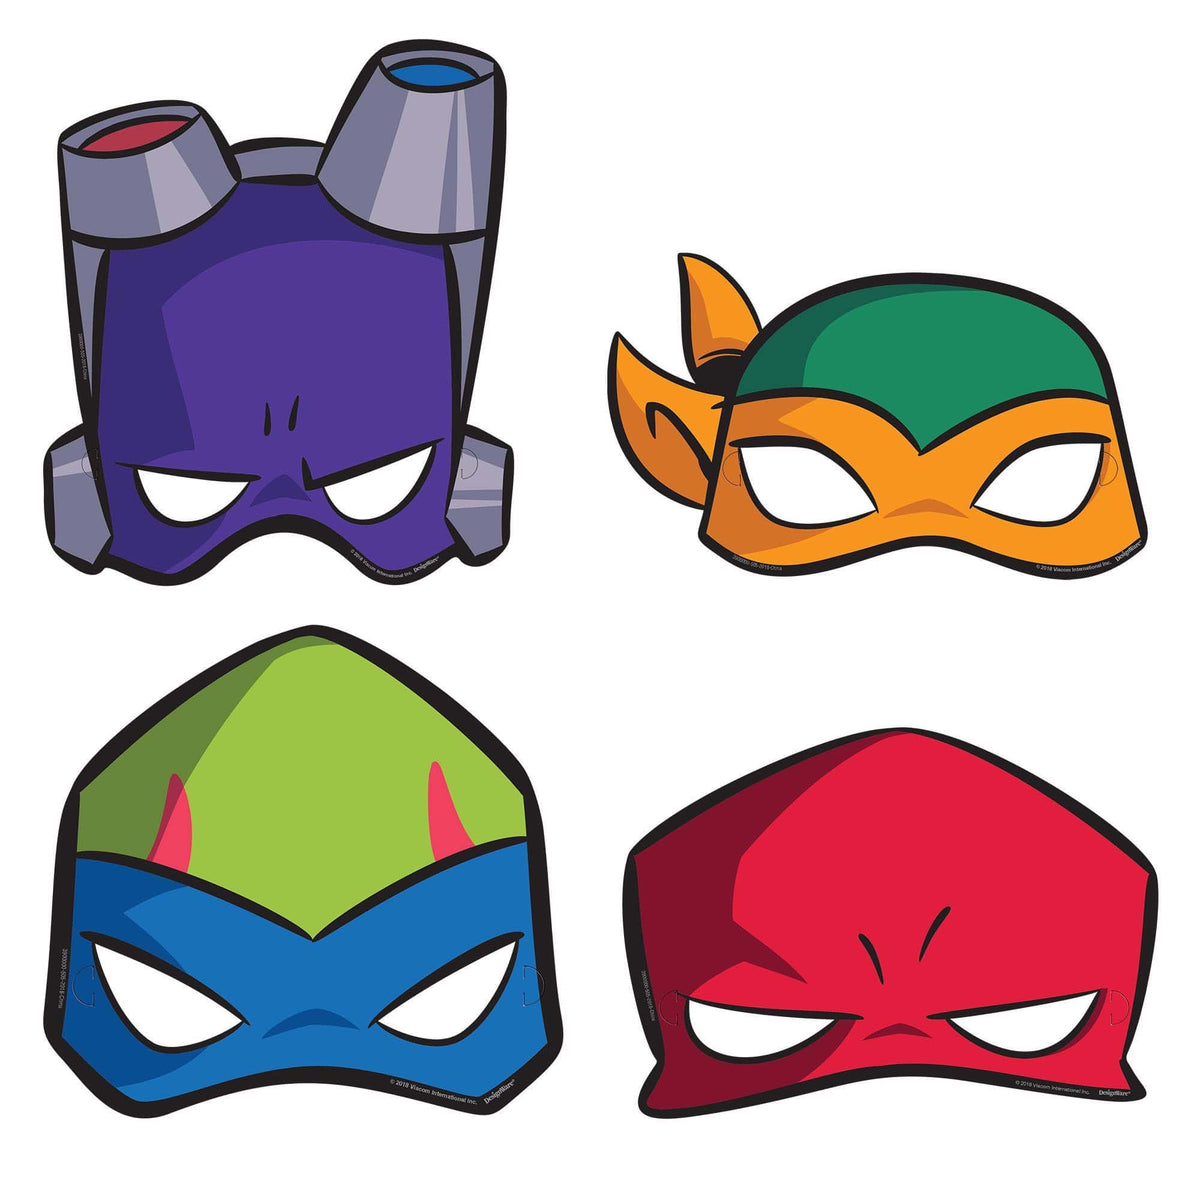 how to make a ninja turtle mask